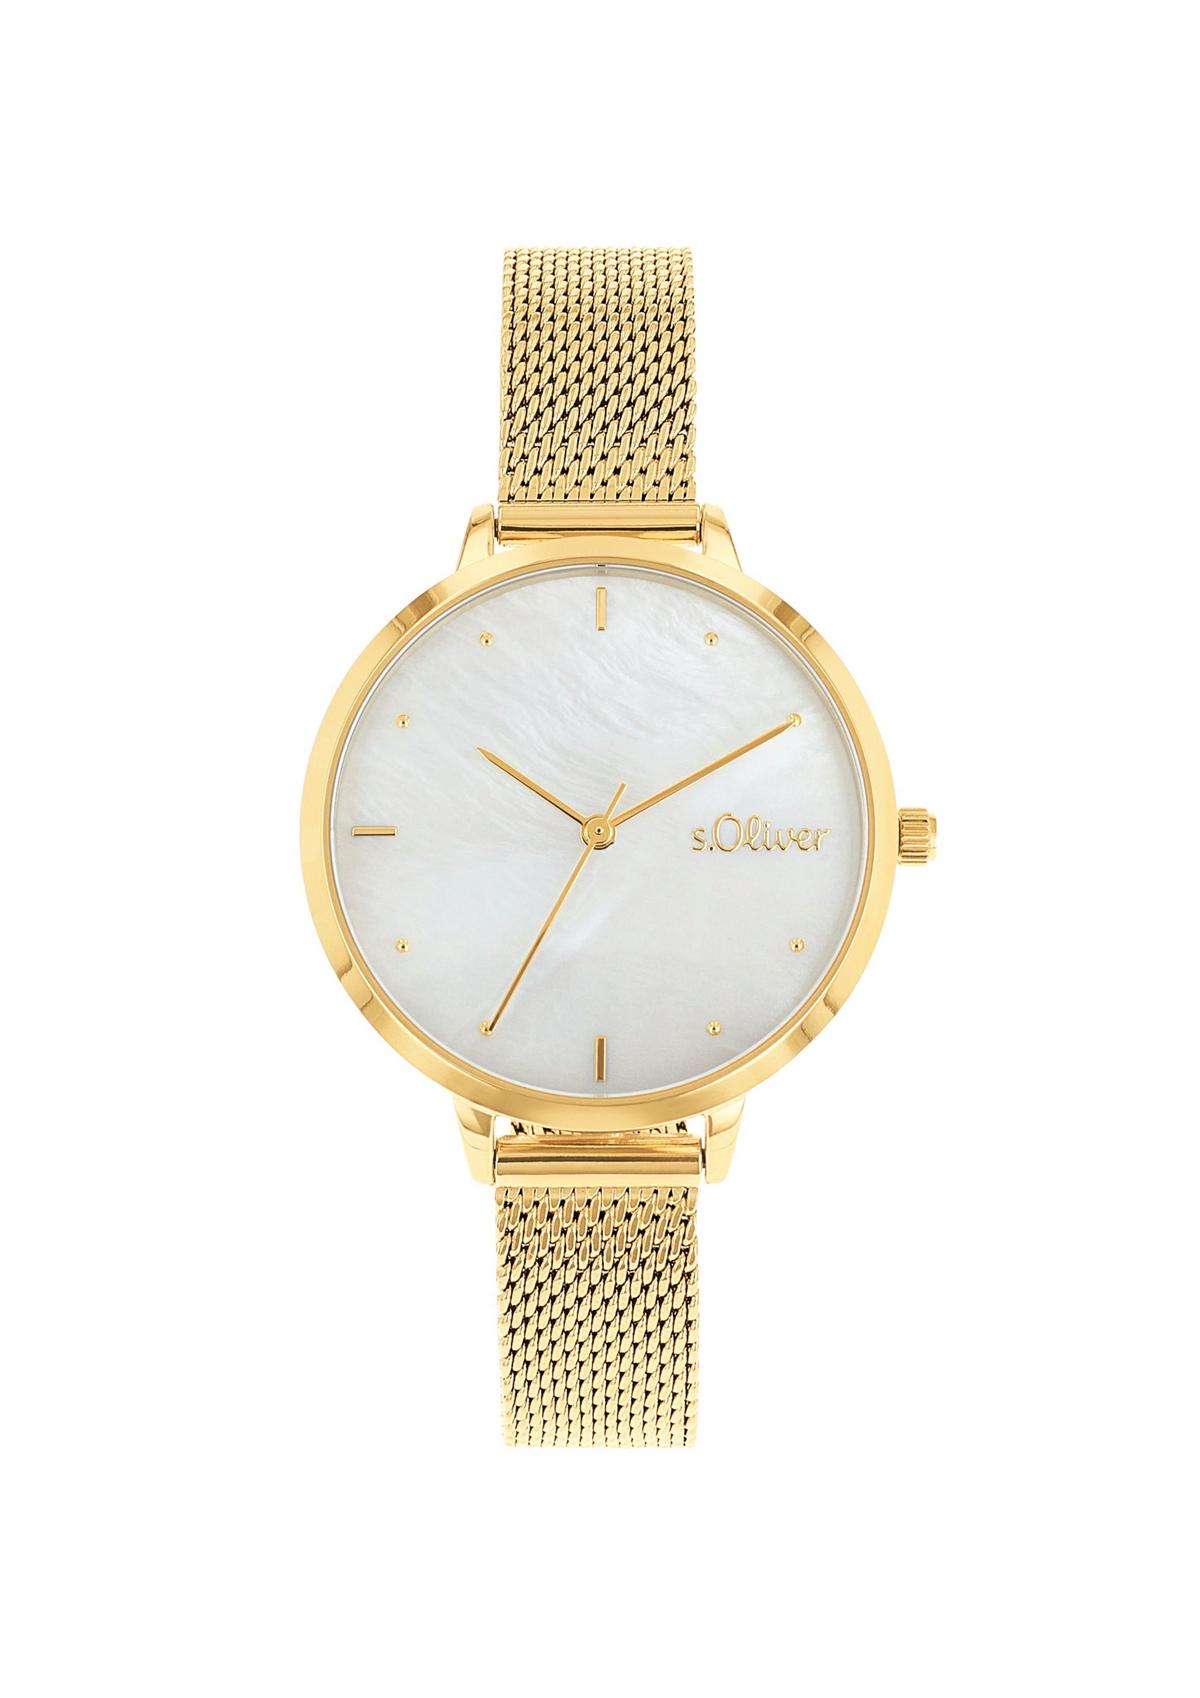 s.Oliver Klassische Milanaise-Armbanduhr